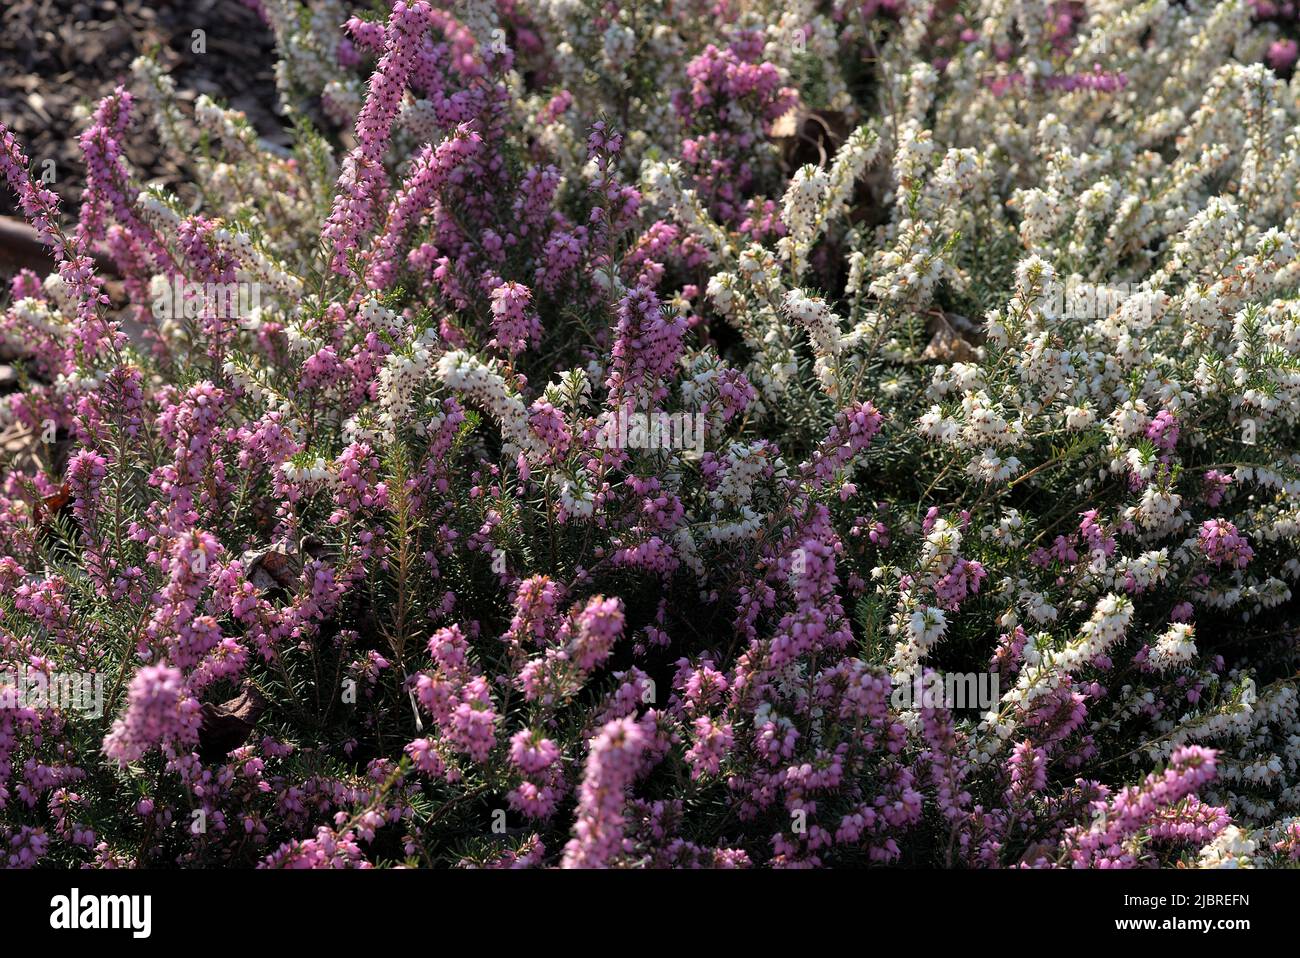 grove of white and pink common heather (calluna vulgaris - Ericaceae) close up Stock Photo